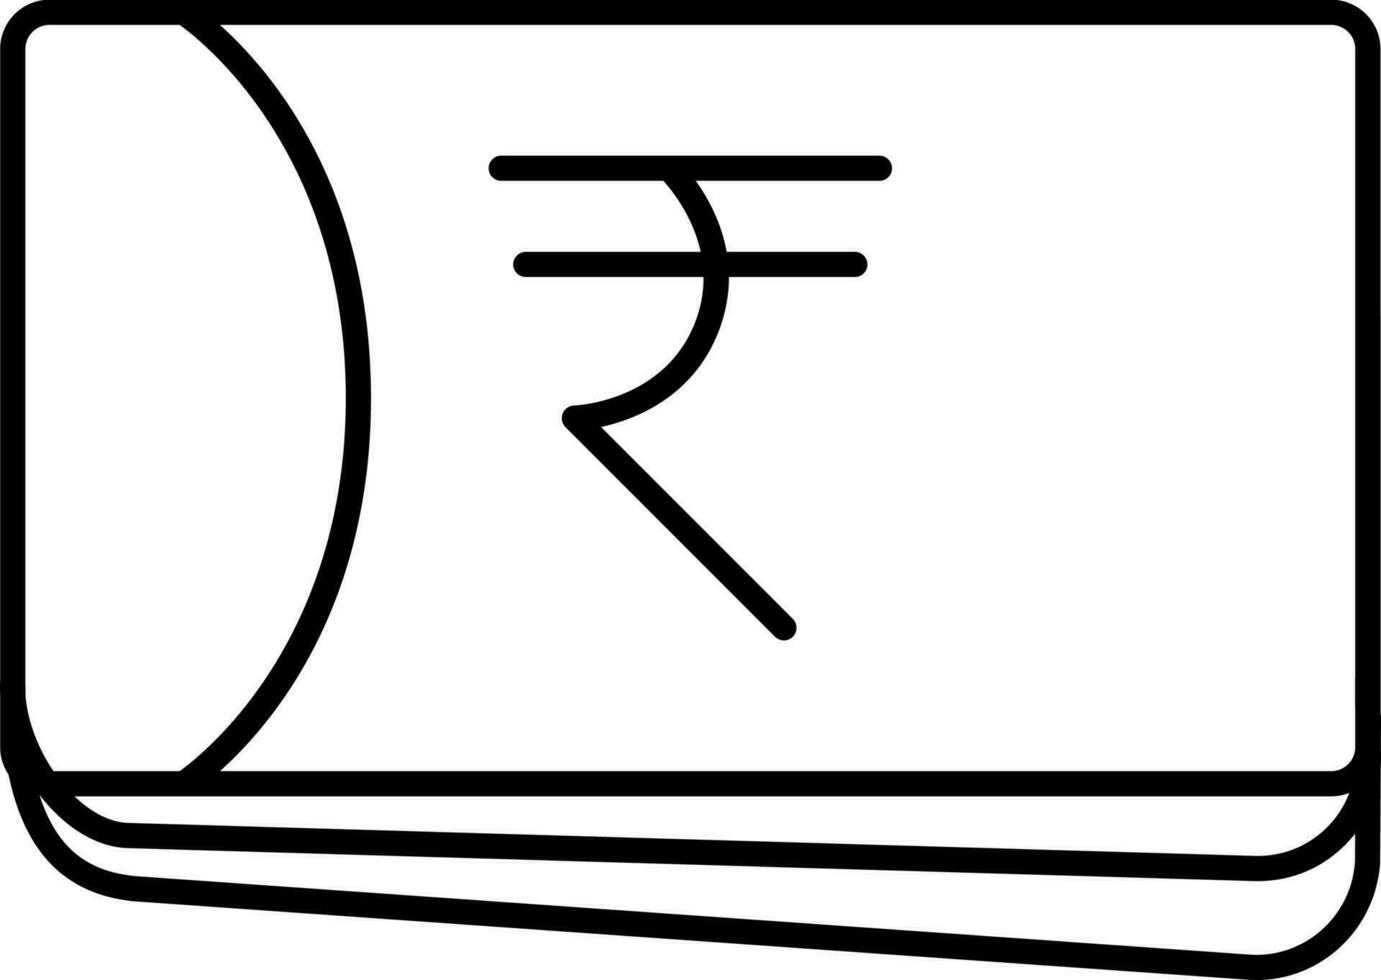 Indian Rupee banknotes symbol. vector